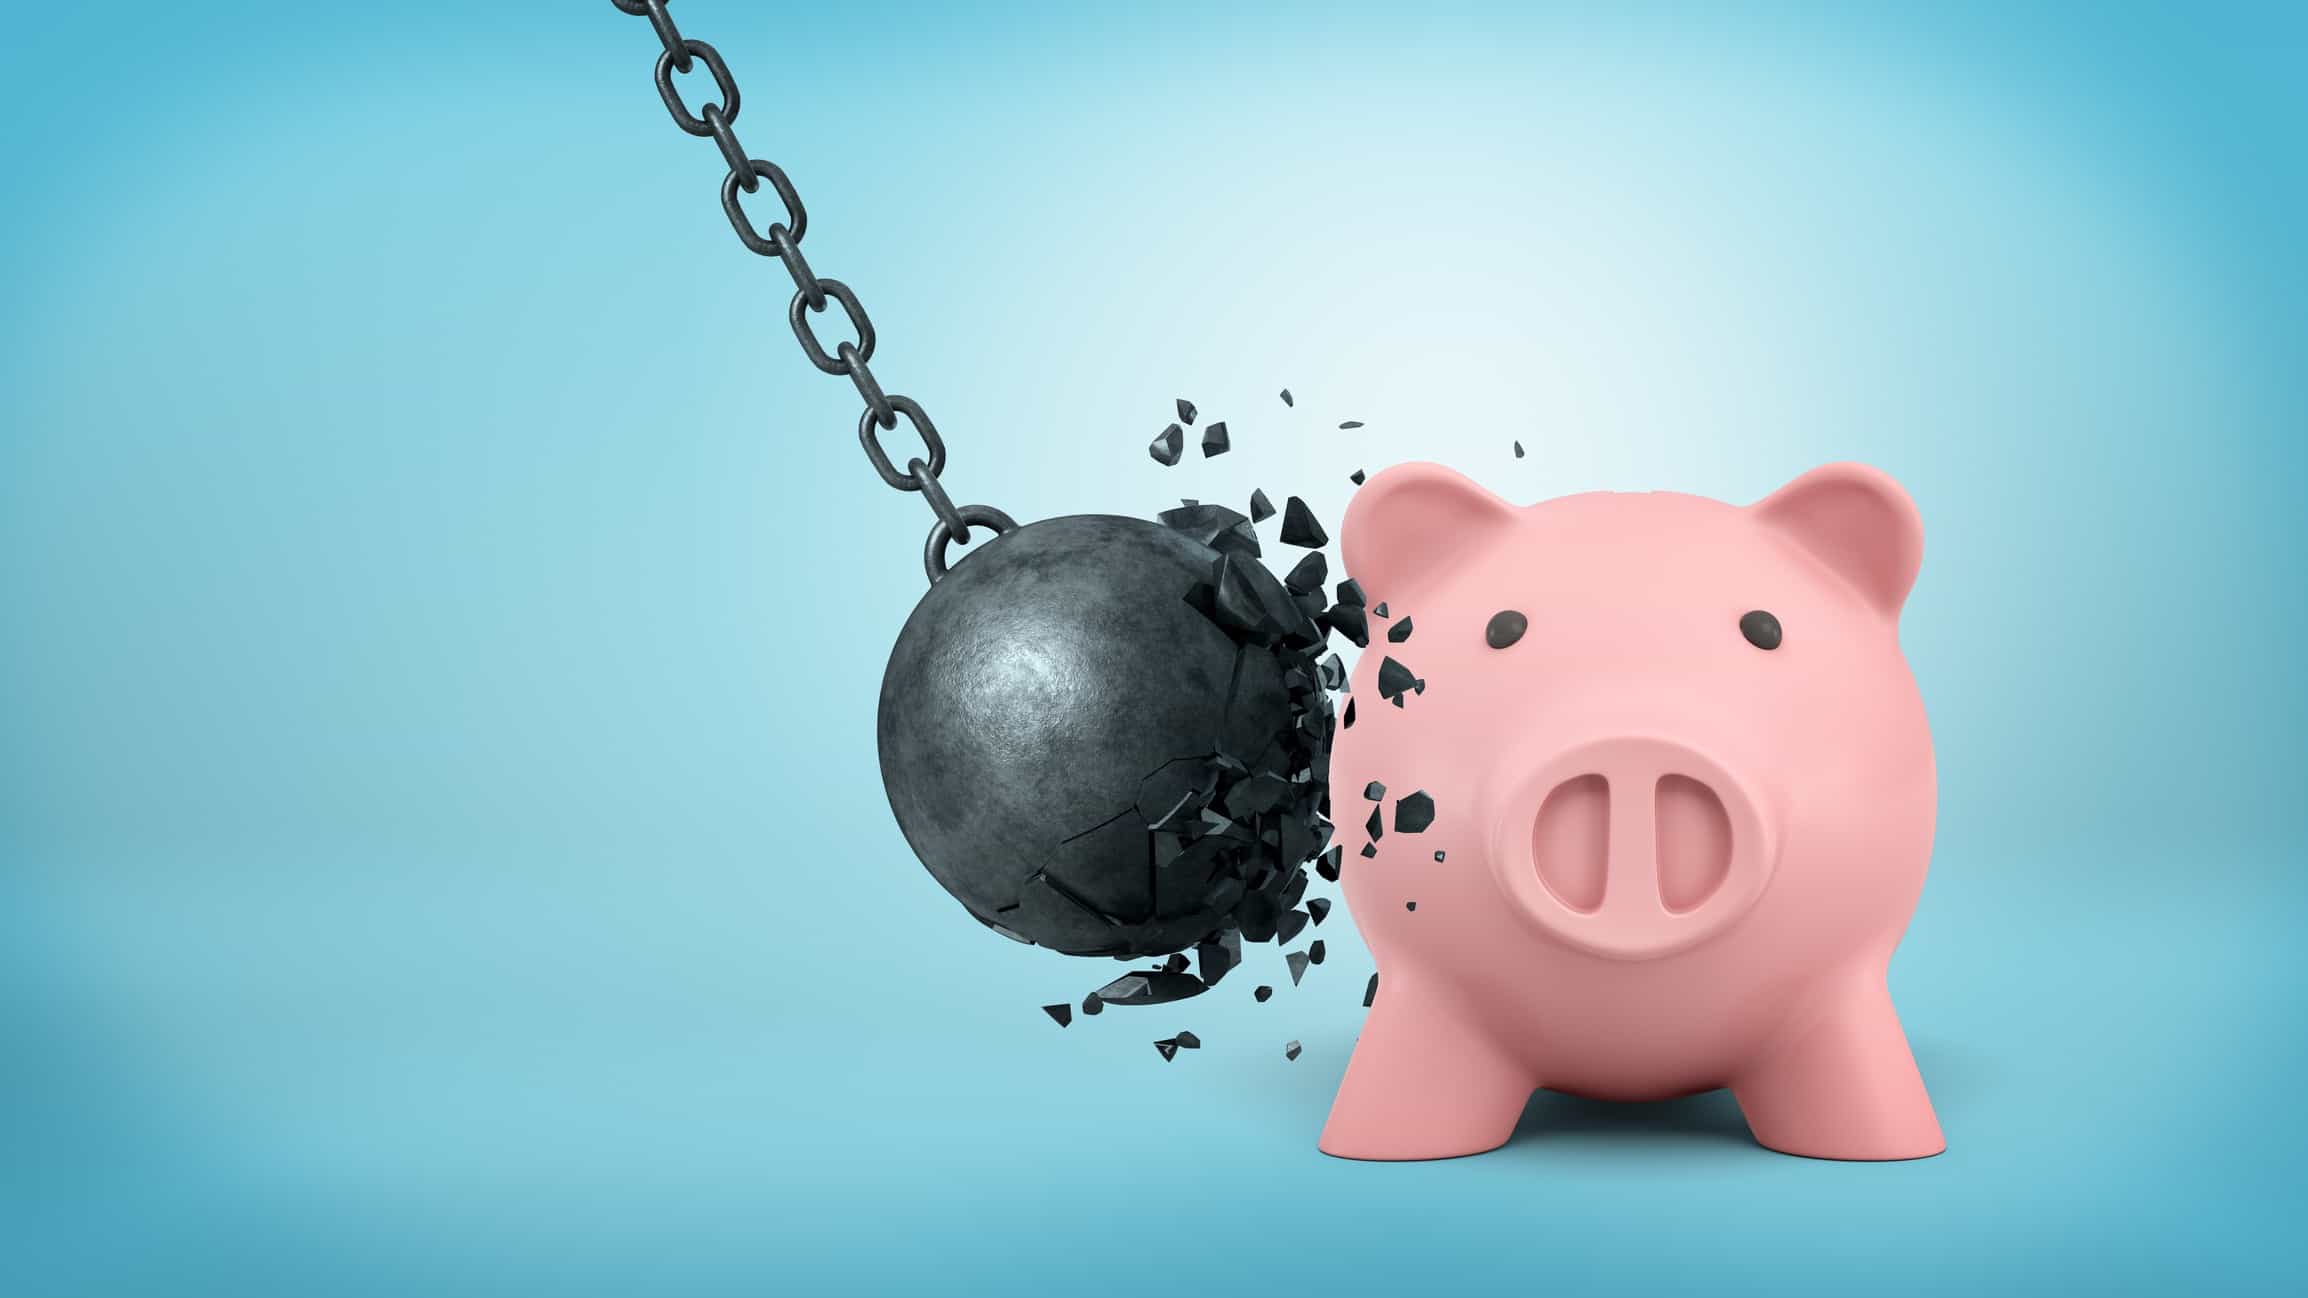 asx share price crash represented by iron ball smashing into piggy bank